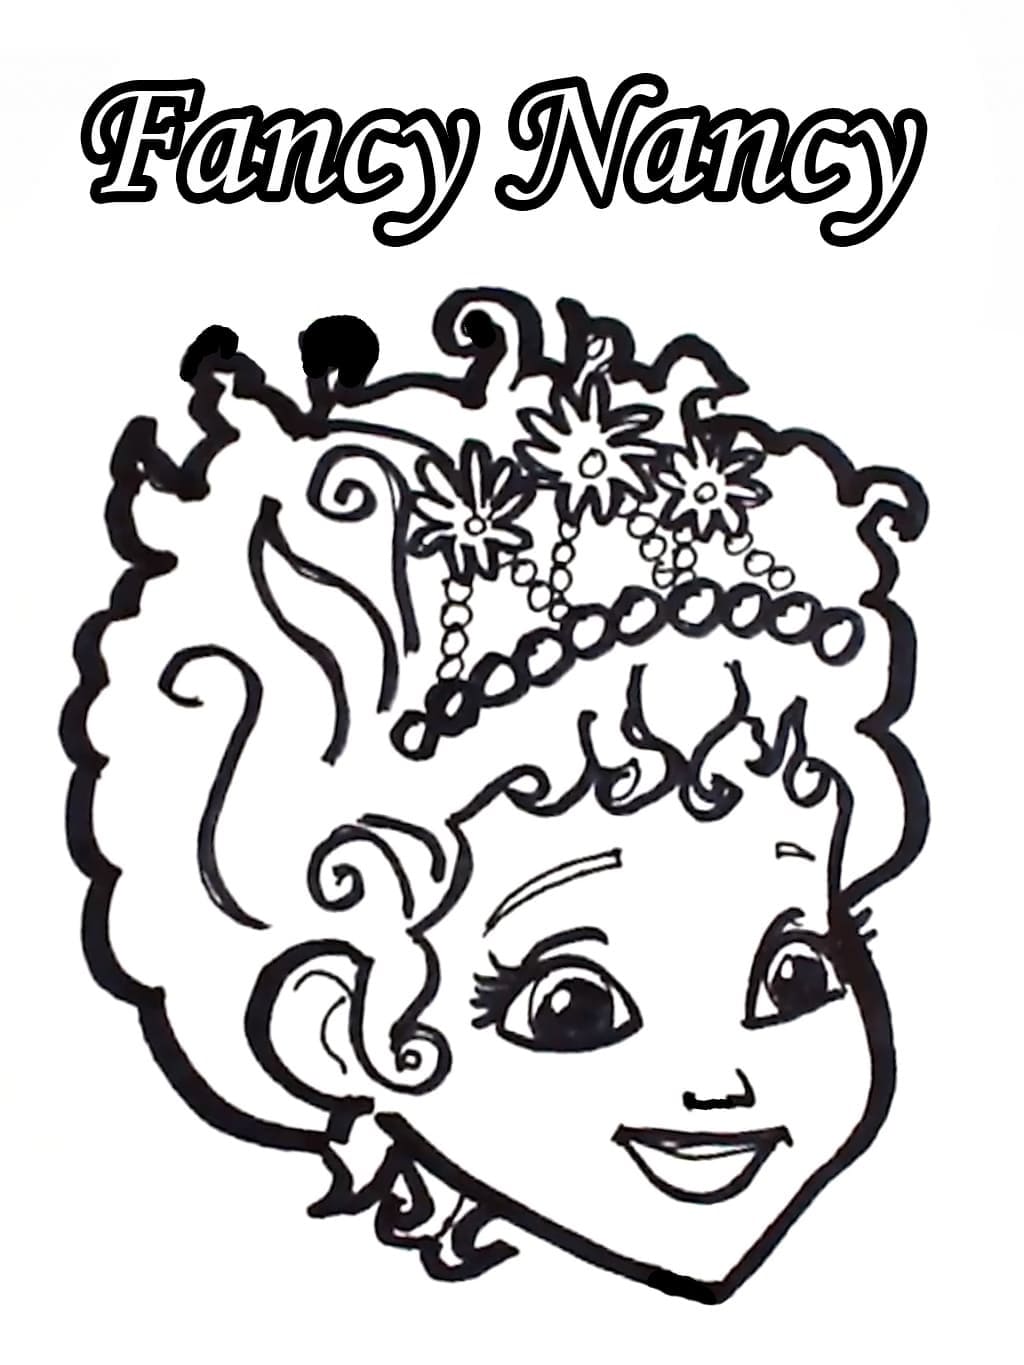 Visage de Fancy Nancy coloring page